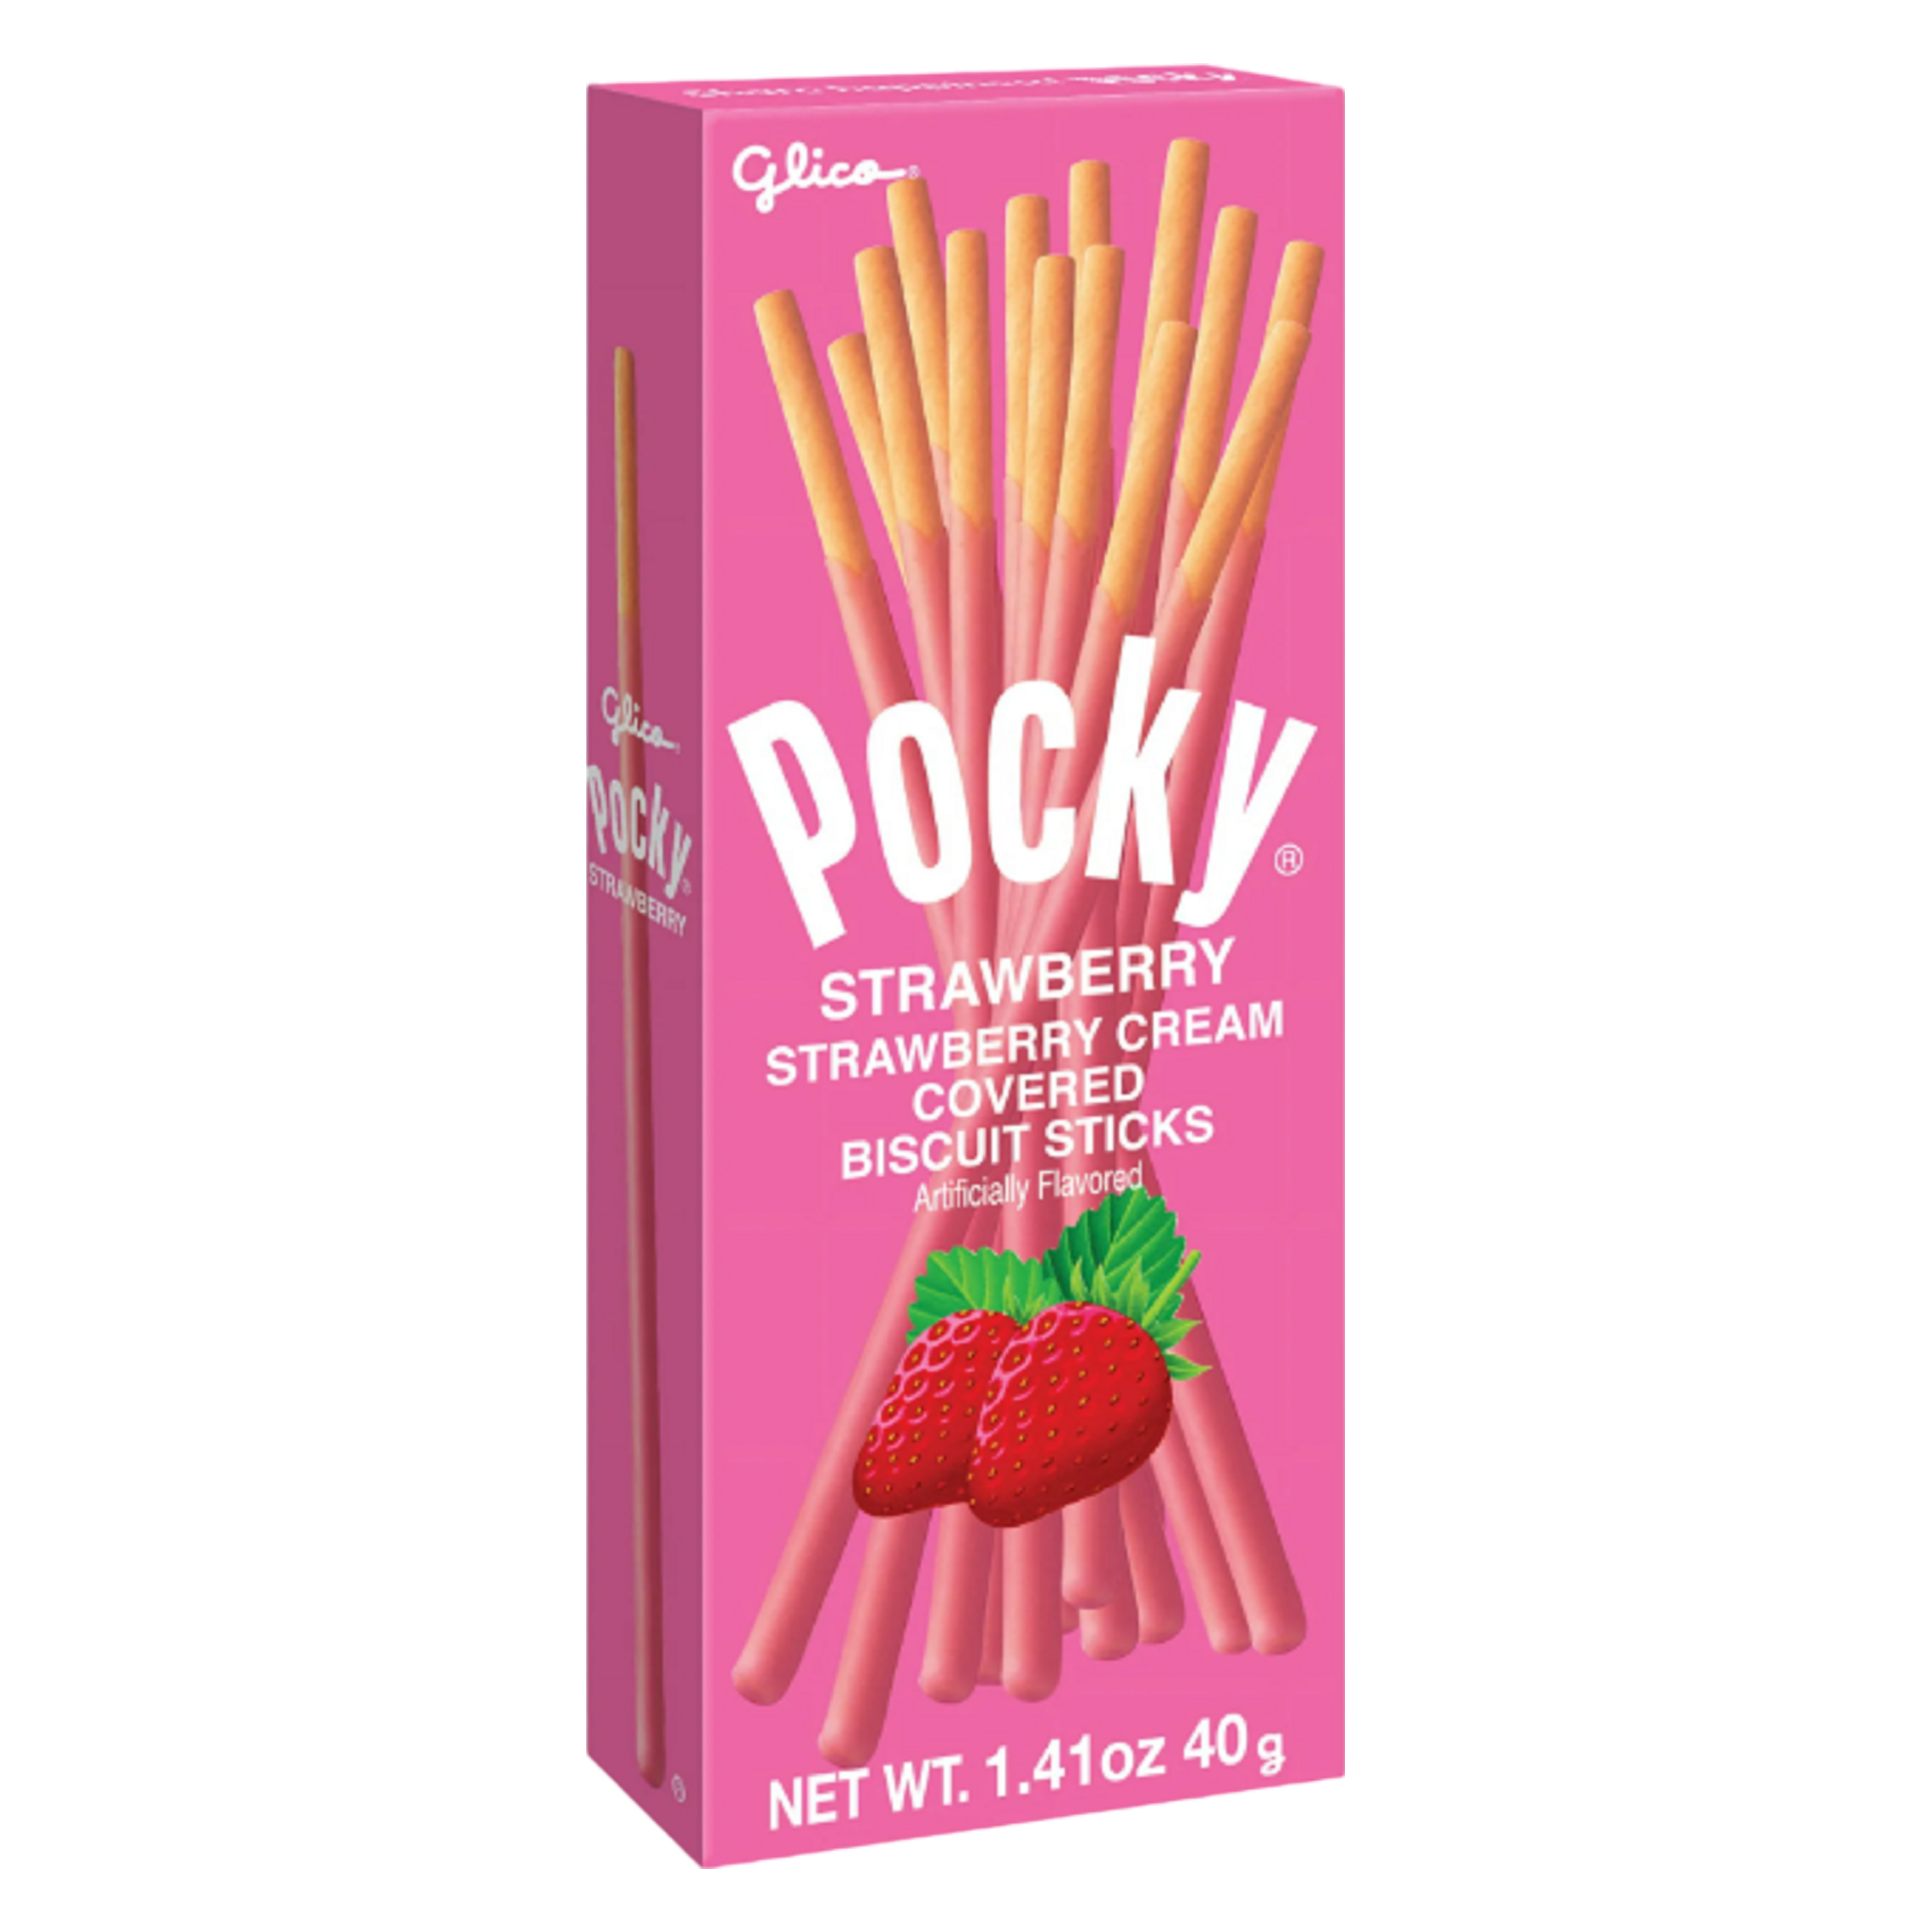 Glico Pocky Strawberry Sticks, 1.41oz